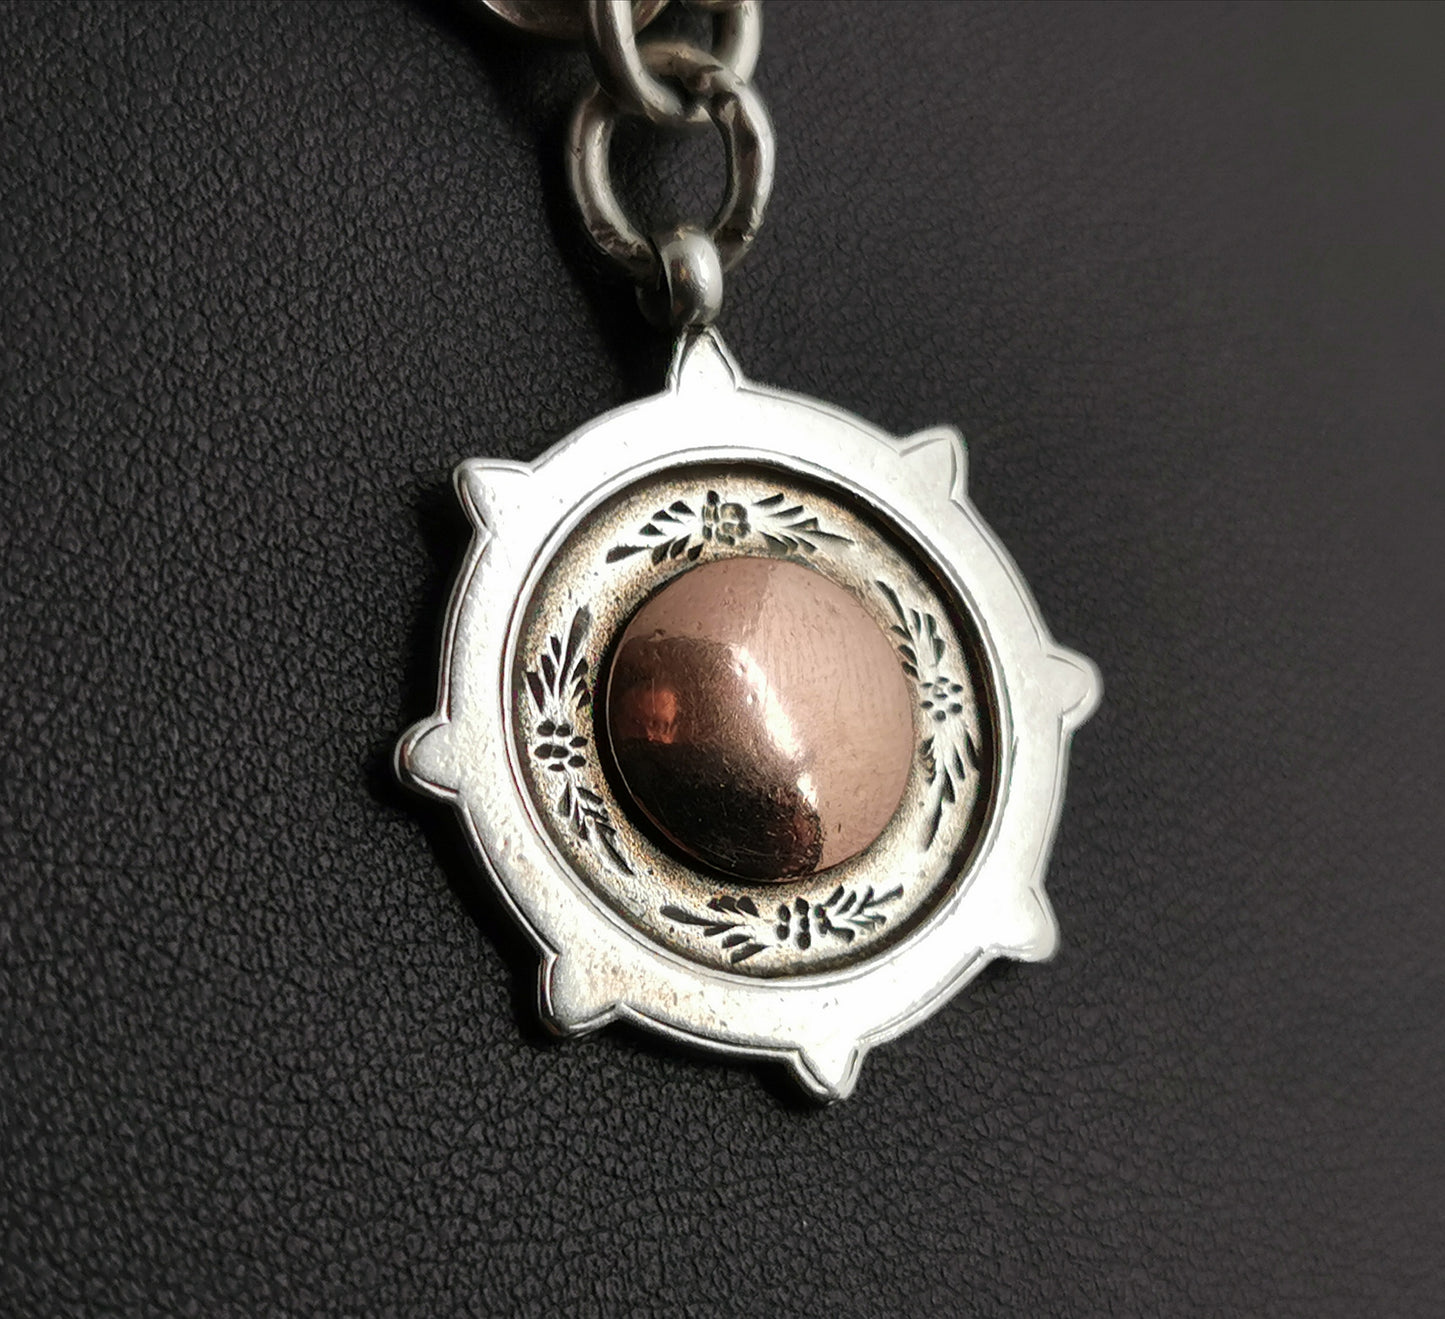 Antique silver Albert chain, chunky curb link, watch chain, fob